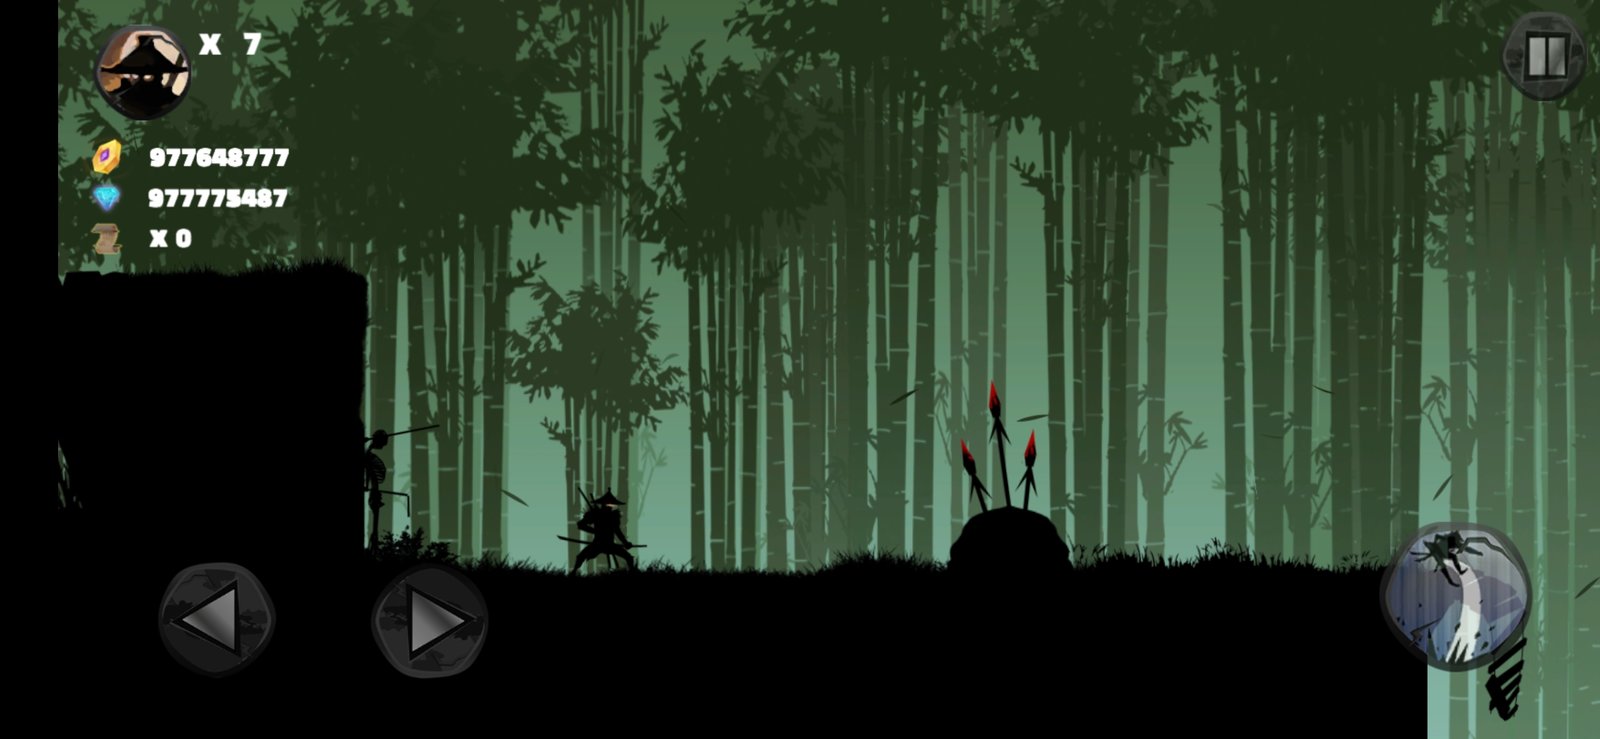 Ninja Run 2: Revenge Of Shadow Runner APK for Android - Download